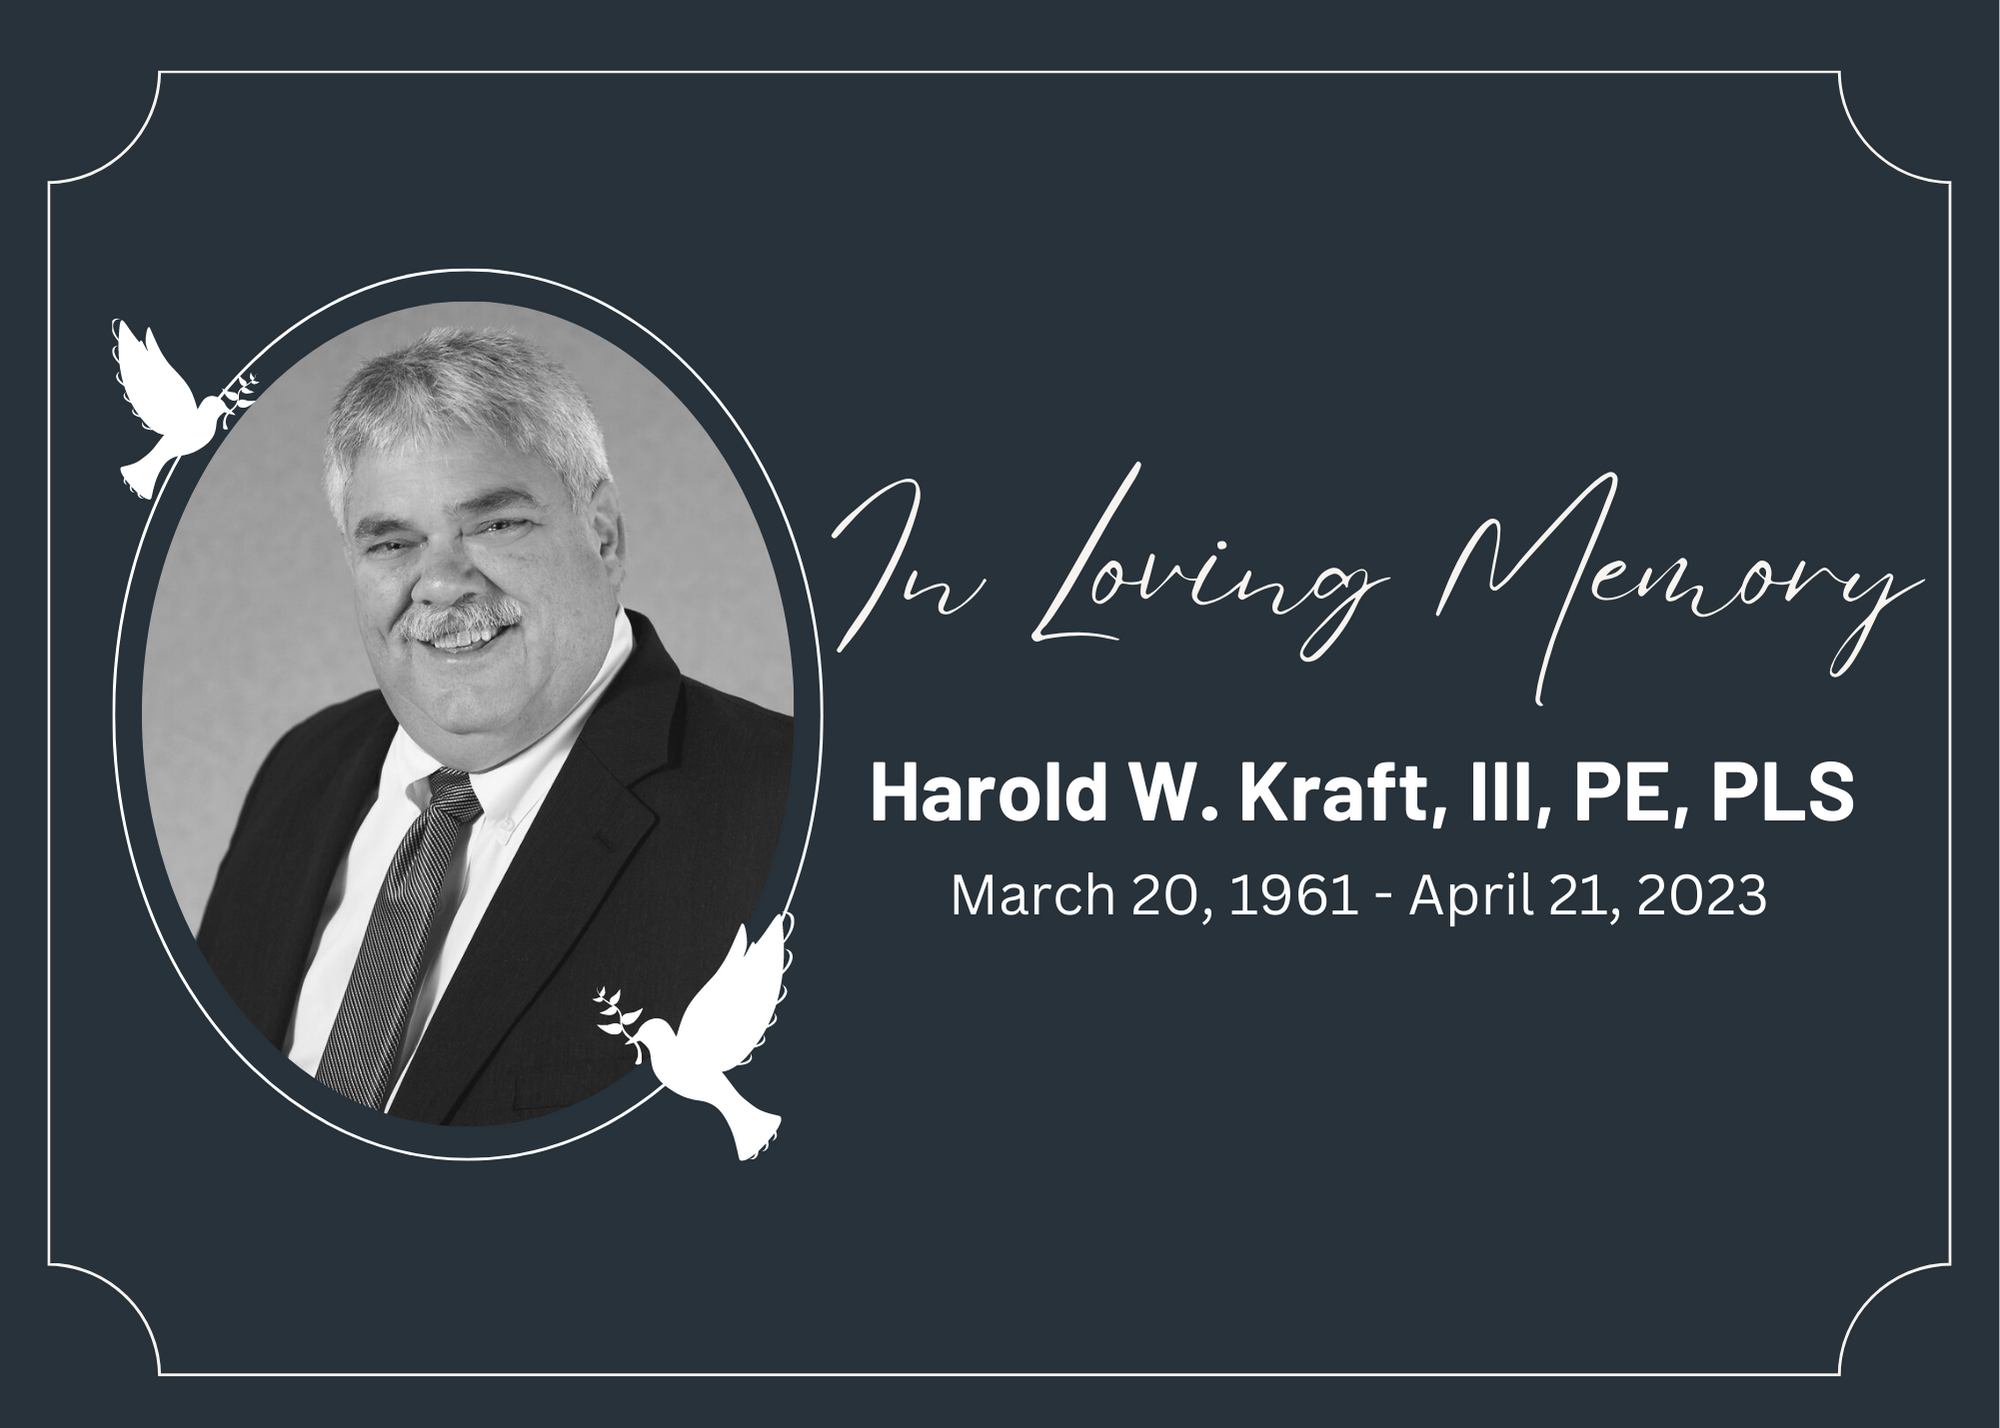 in loving memory of Hal Kraft